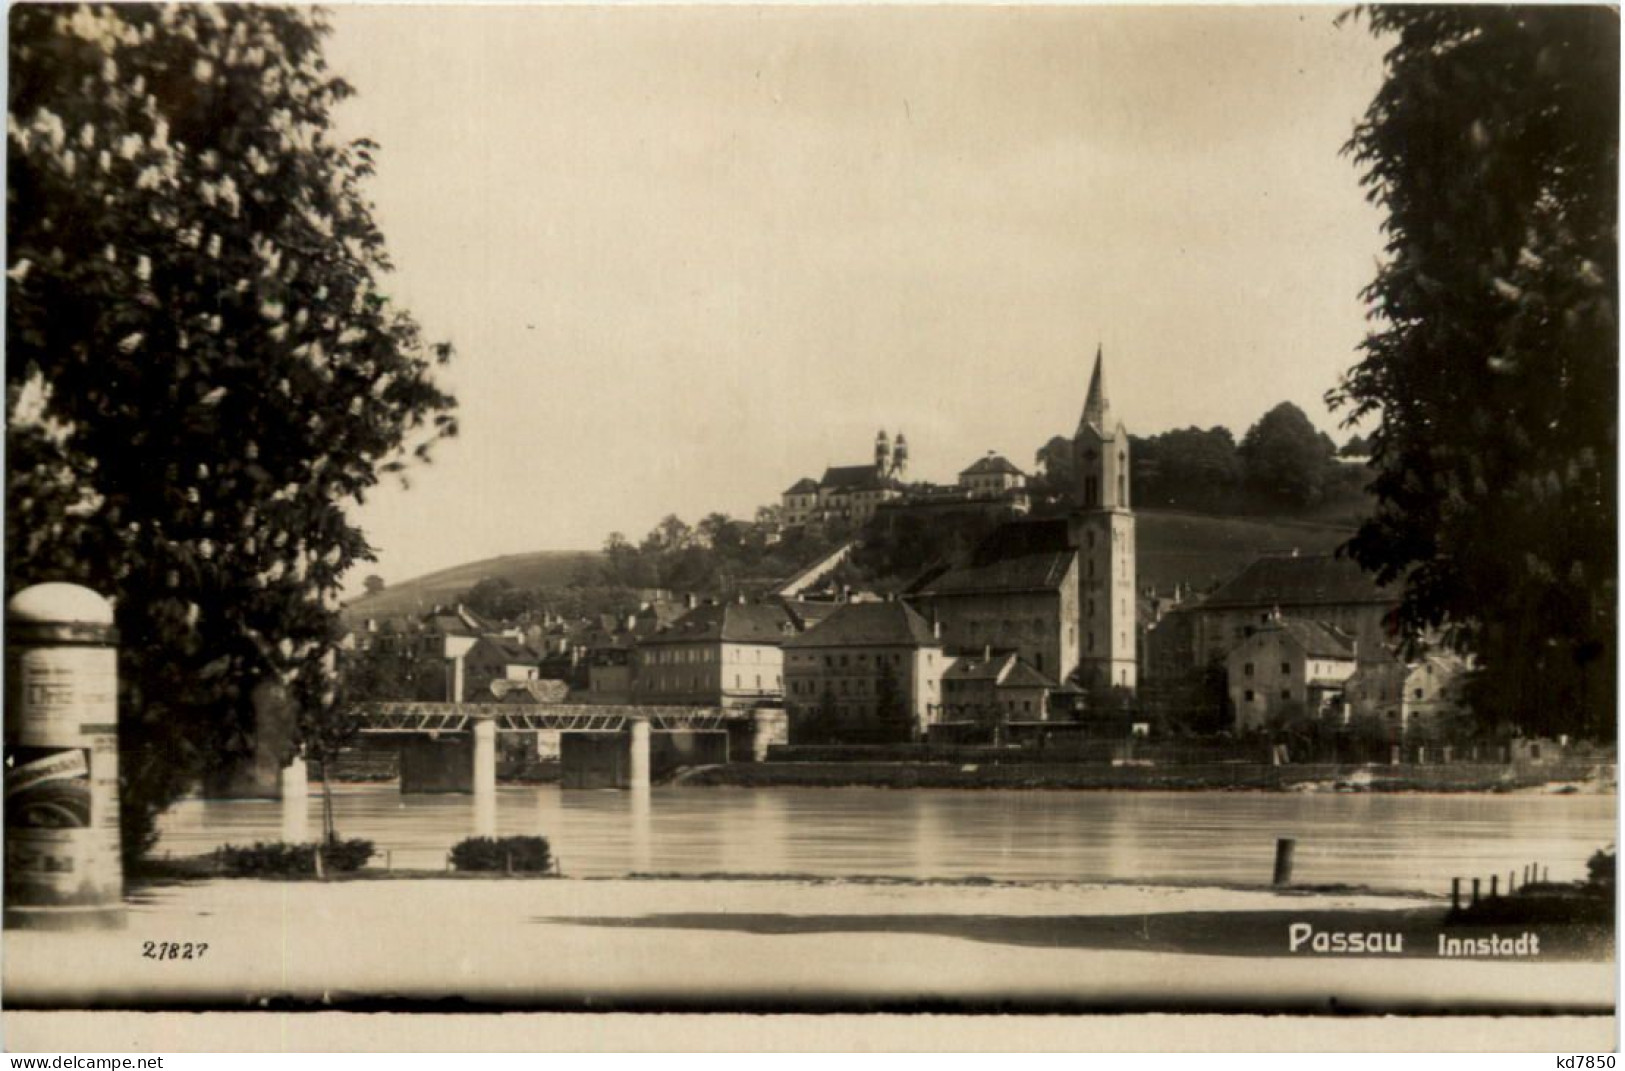 Passau, Innstadt - Passau